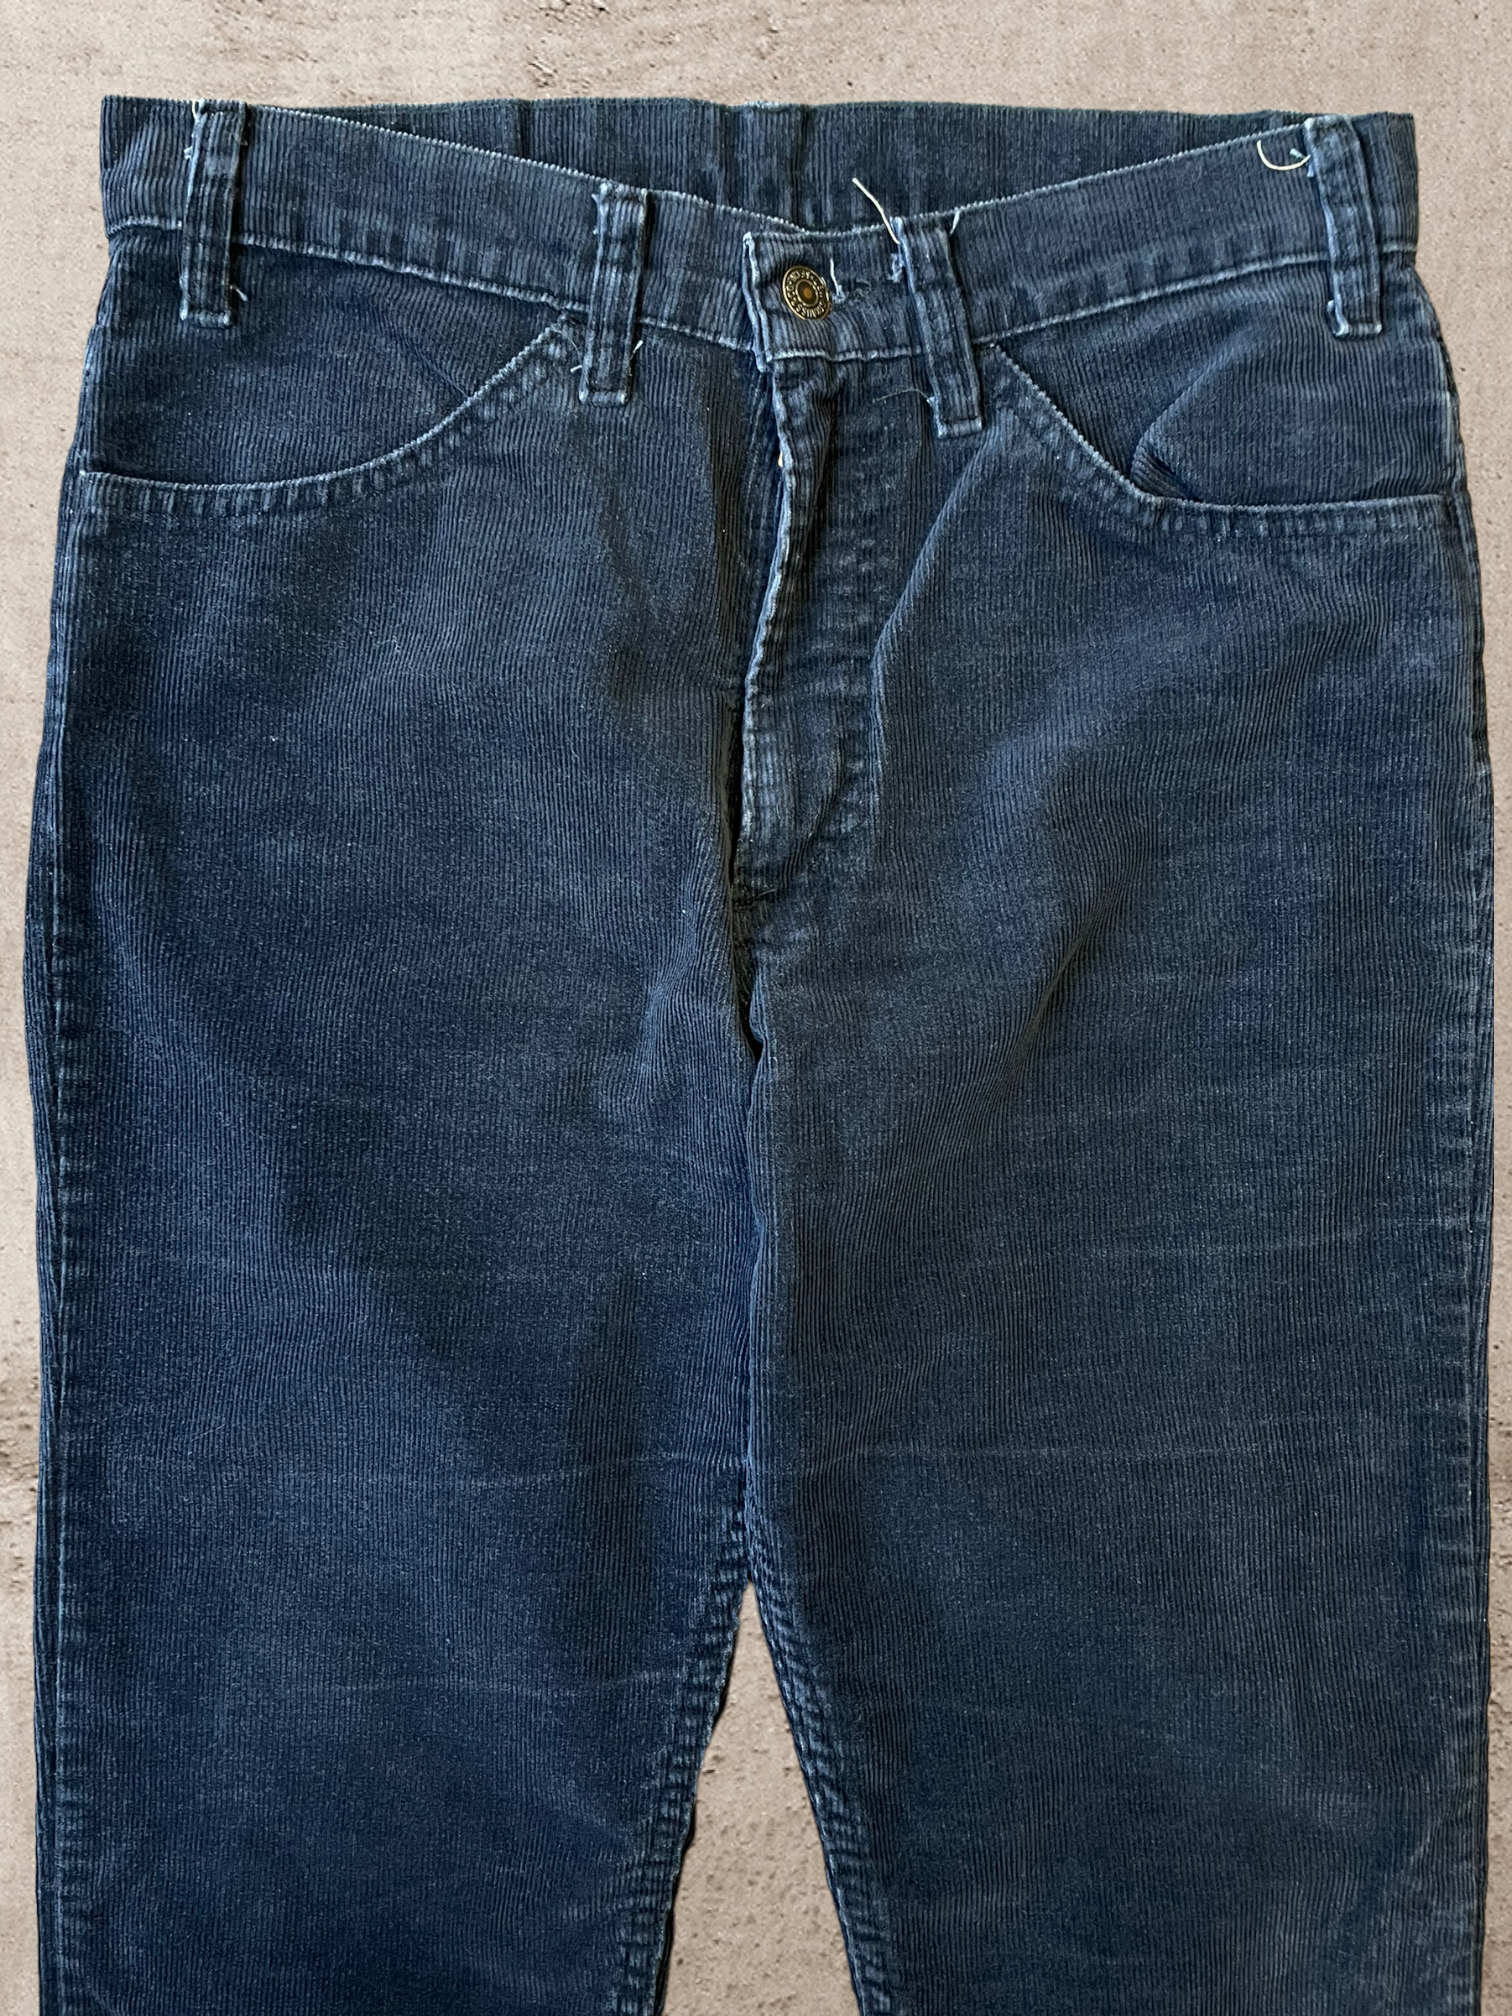 Vintage Levi Navy Blue Corduroy Pants - 32x31